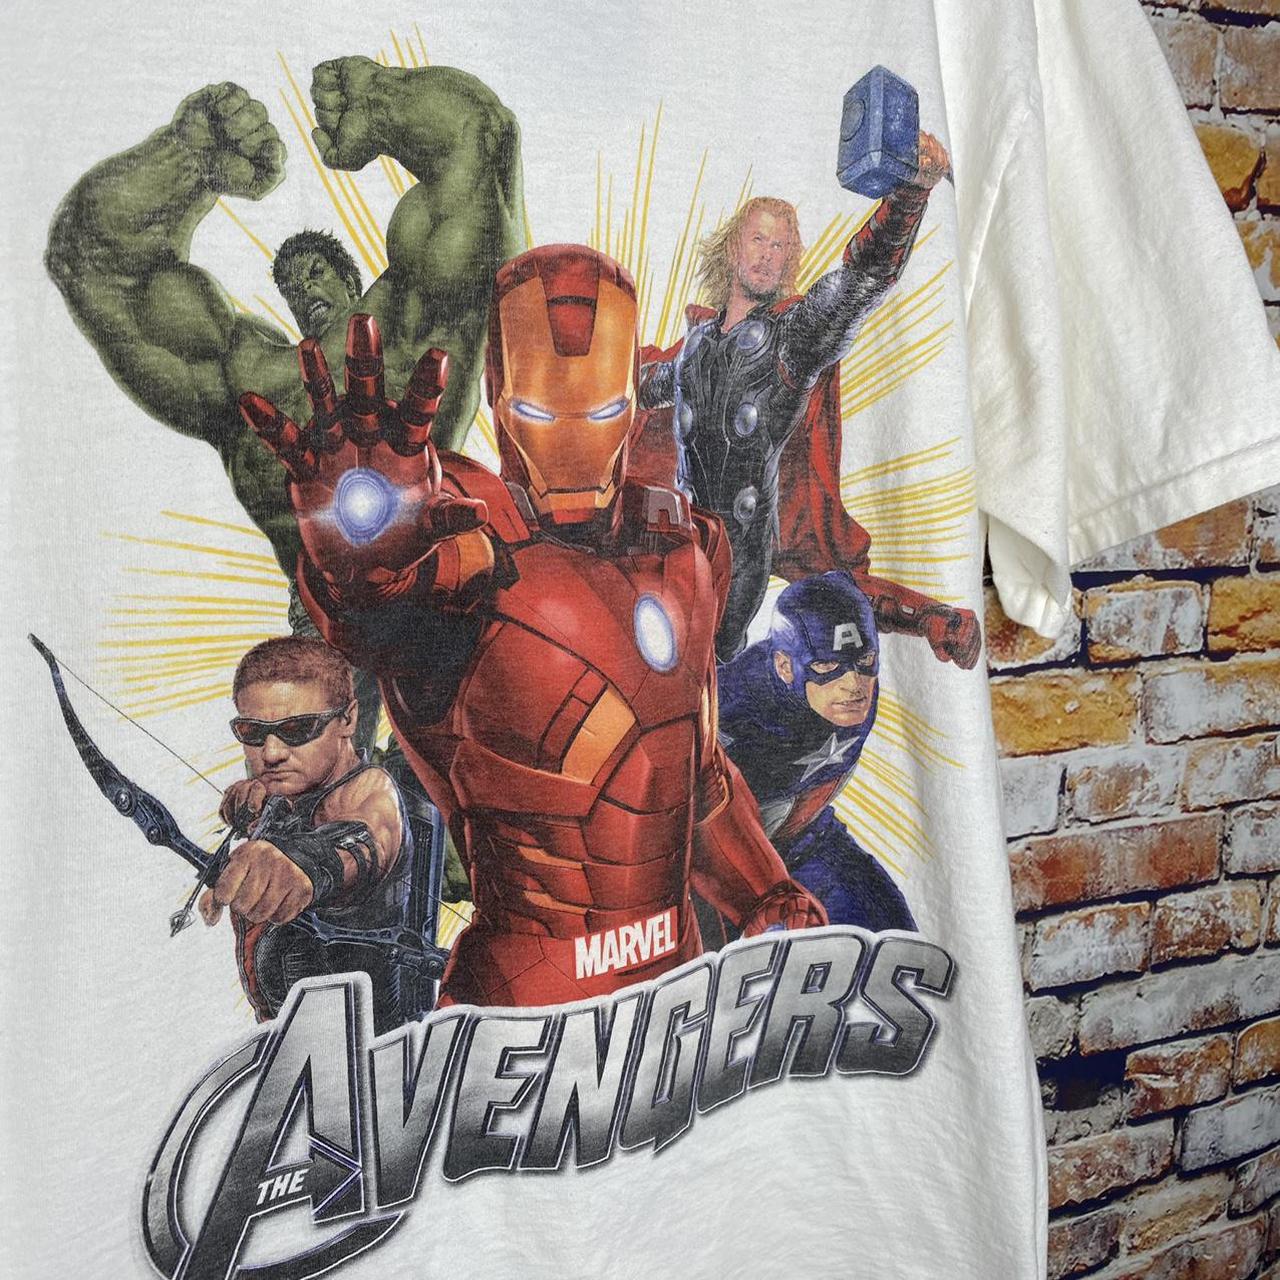 Marvel The Avengers 2012 Movie Promo T Shirt, Size: